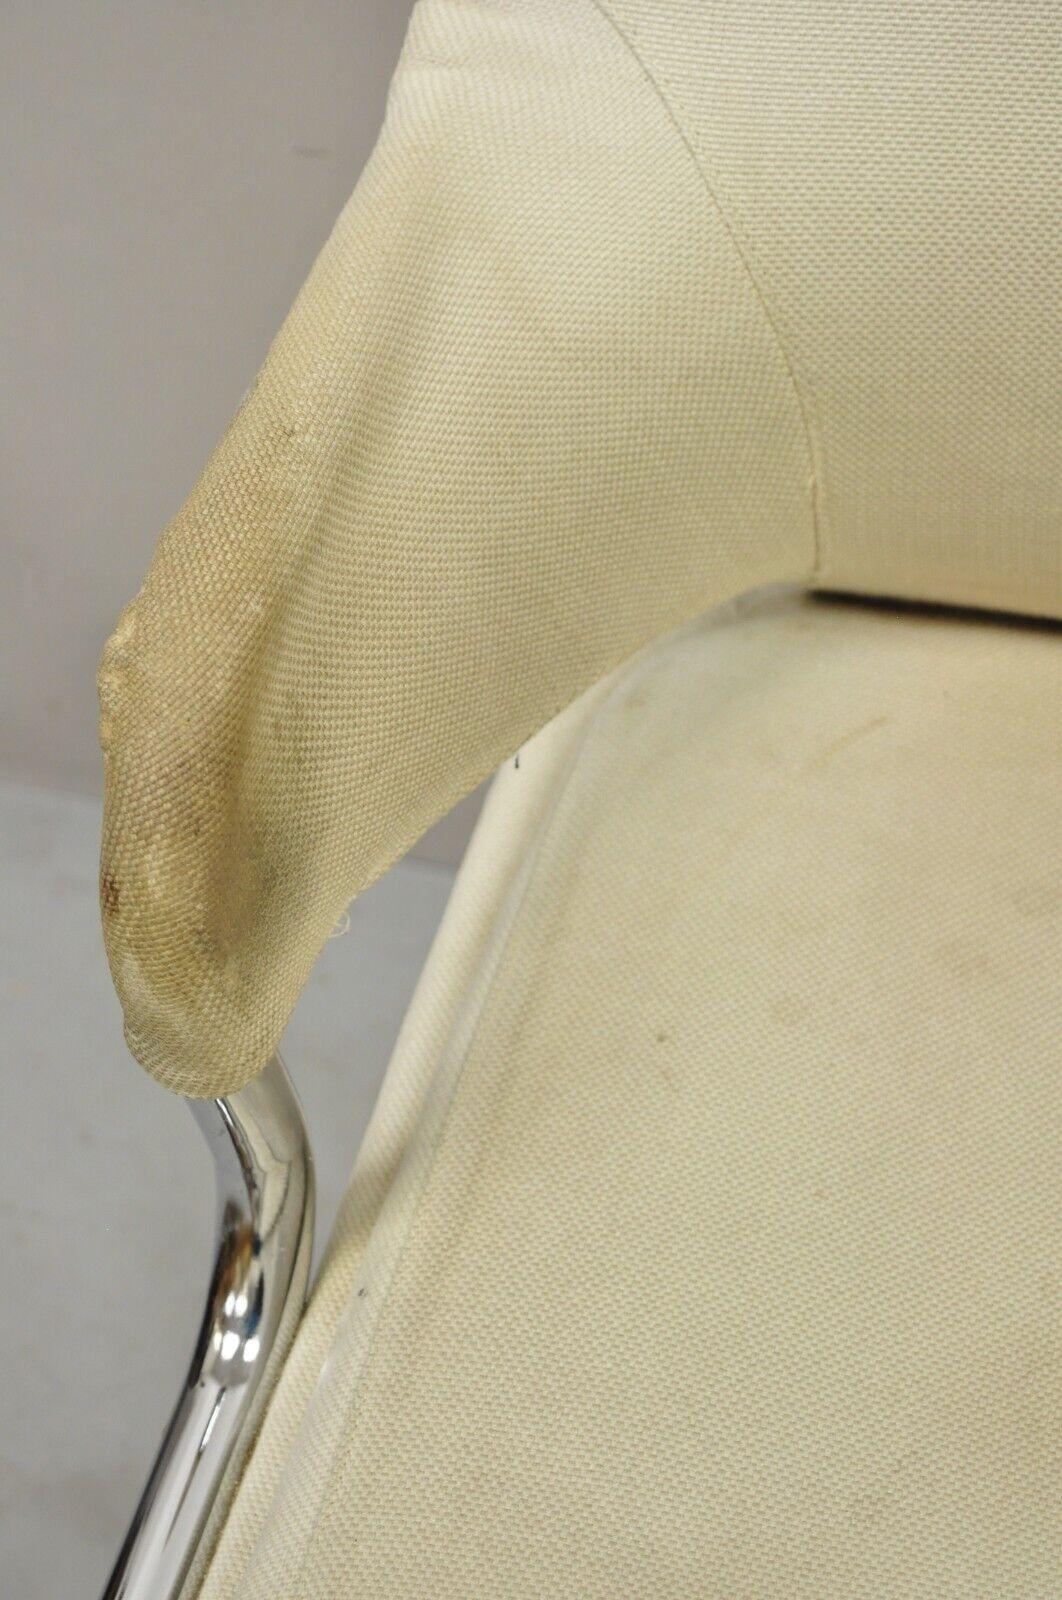 Vintage Mid-Century Modern Tubular Chrome Arm Chair with Burlap Seat For Sale 2